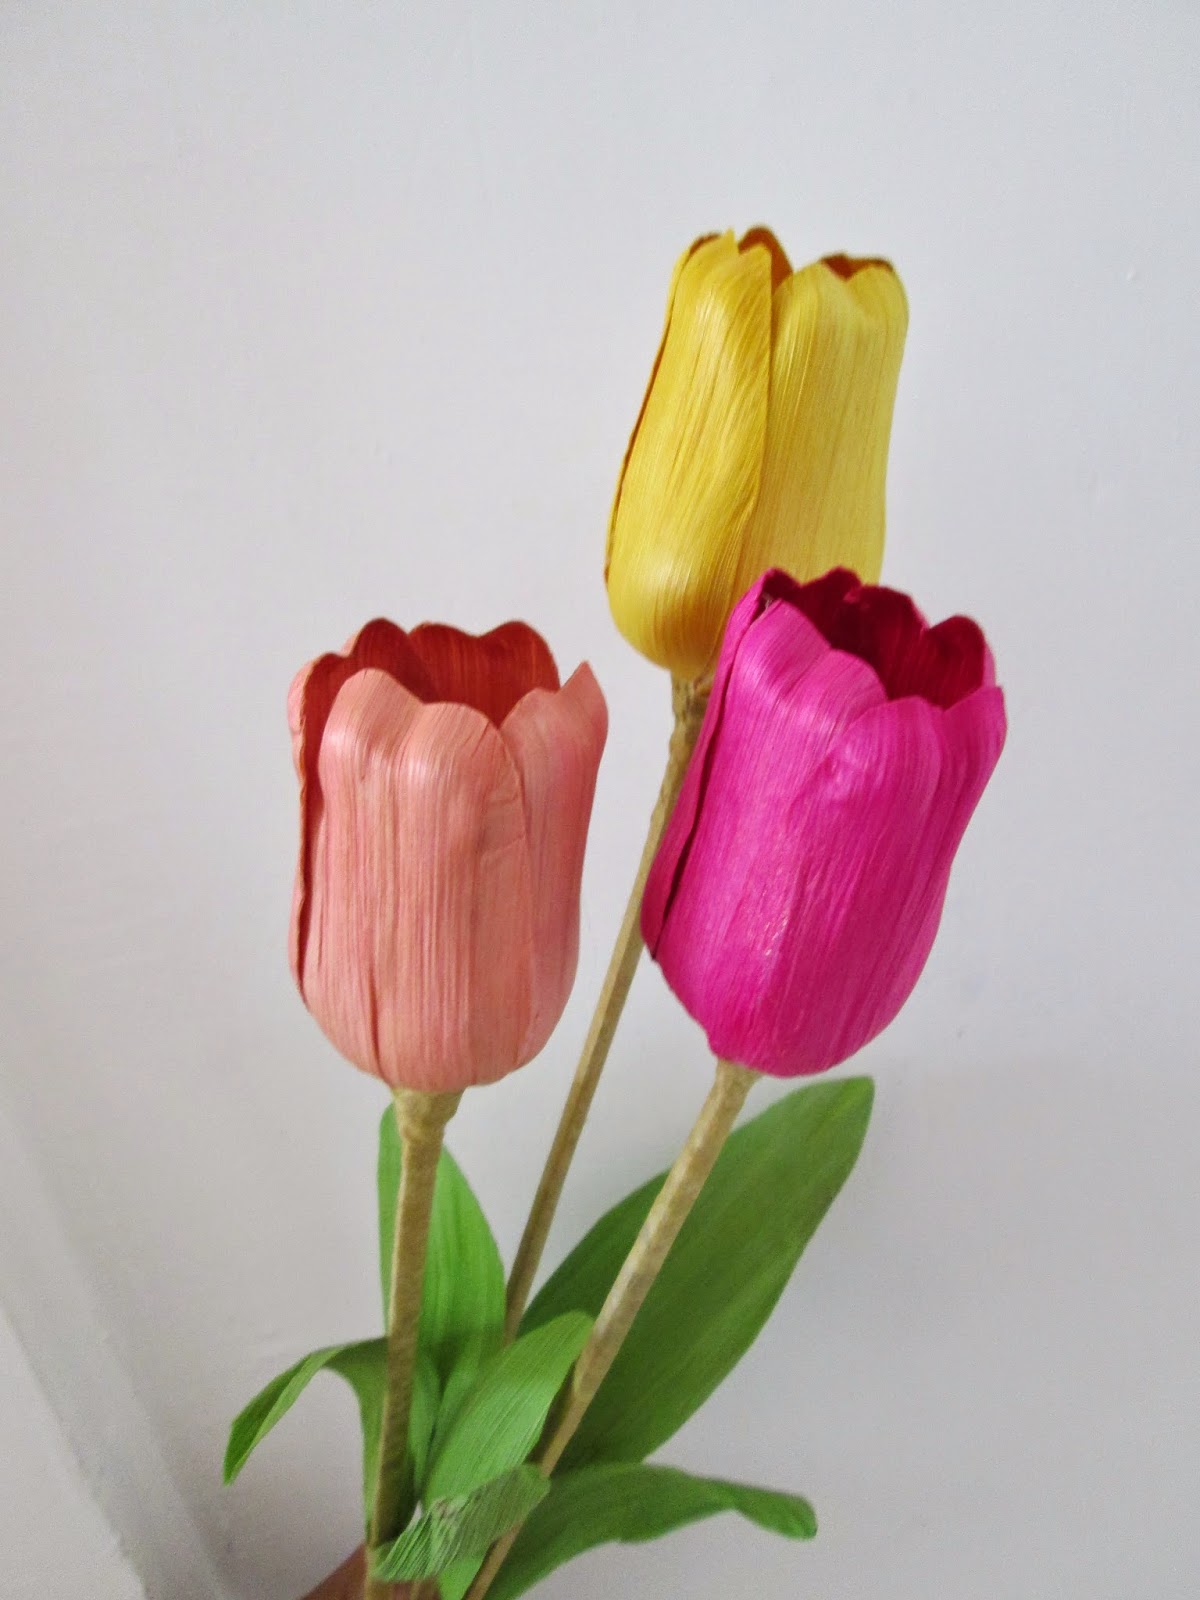  Gambar  Kerajinan Kulit  Jagung  Klobot Macam Harga Tulip 